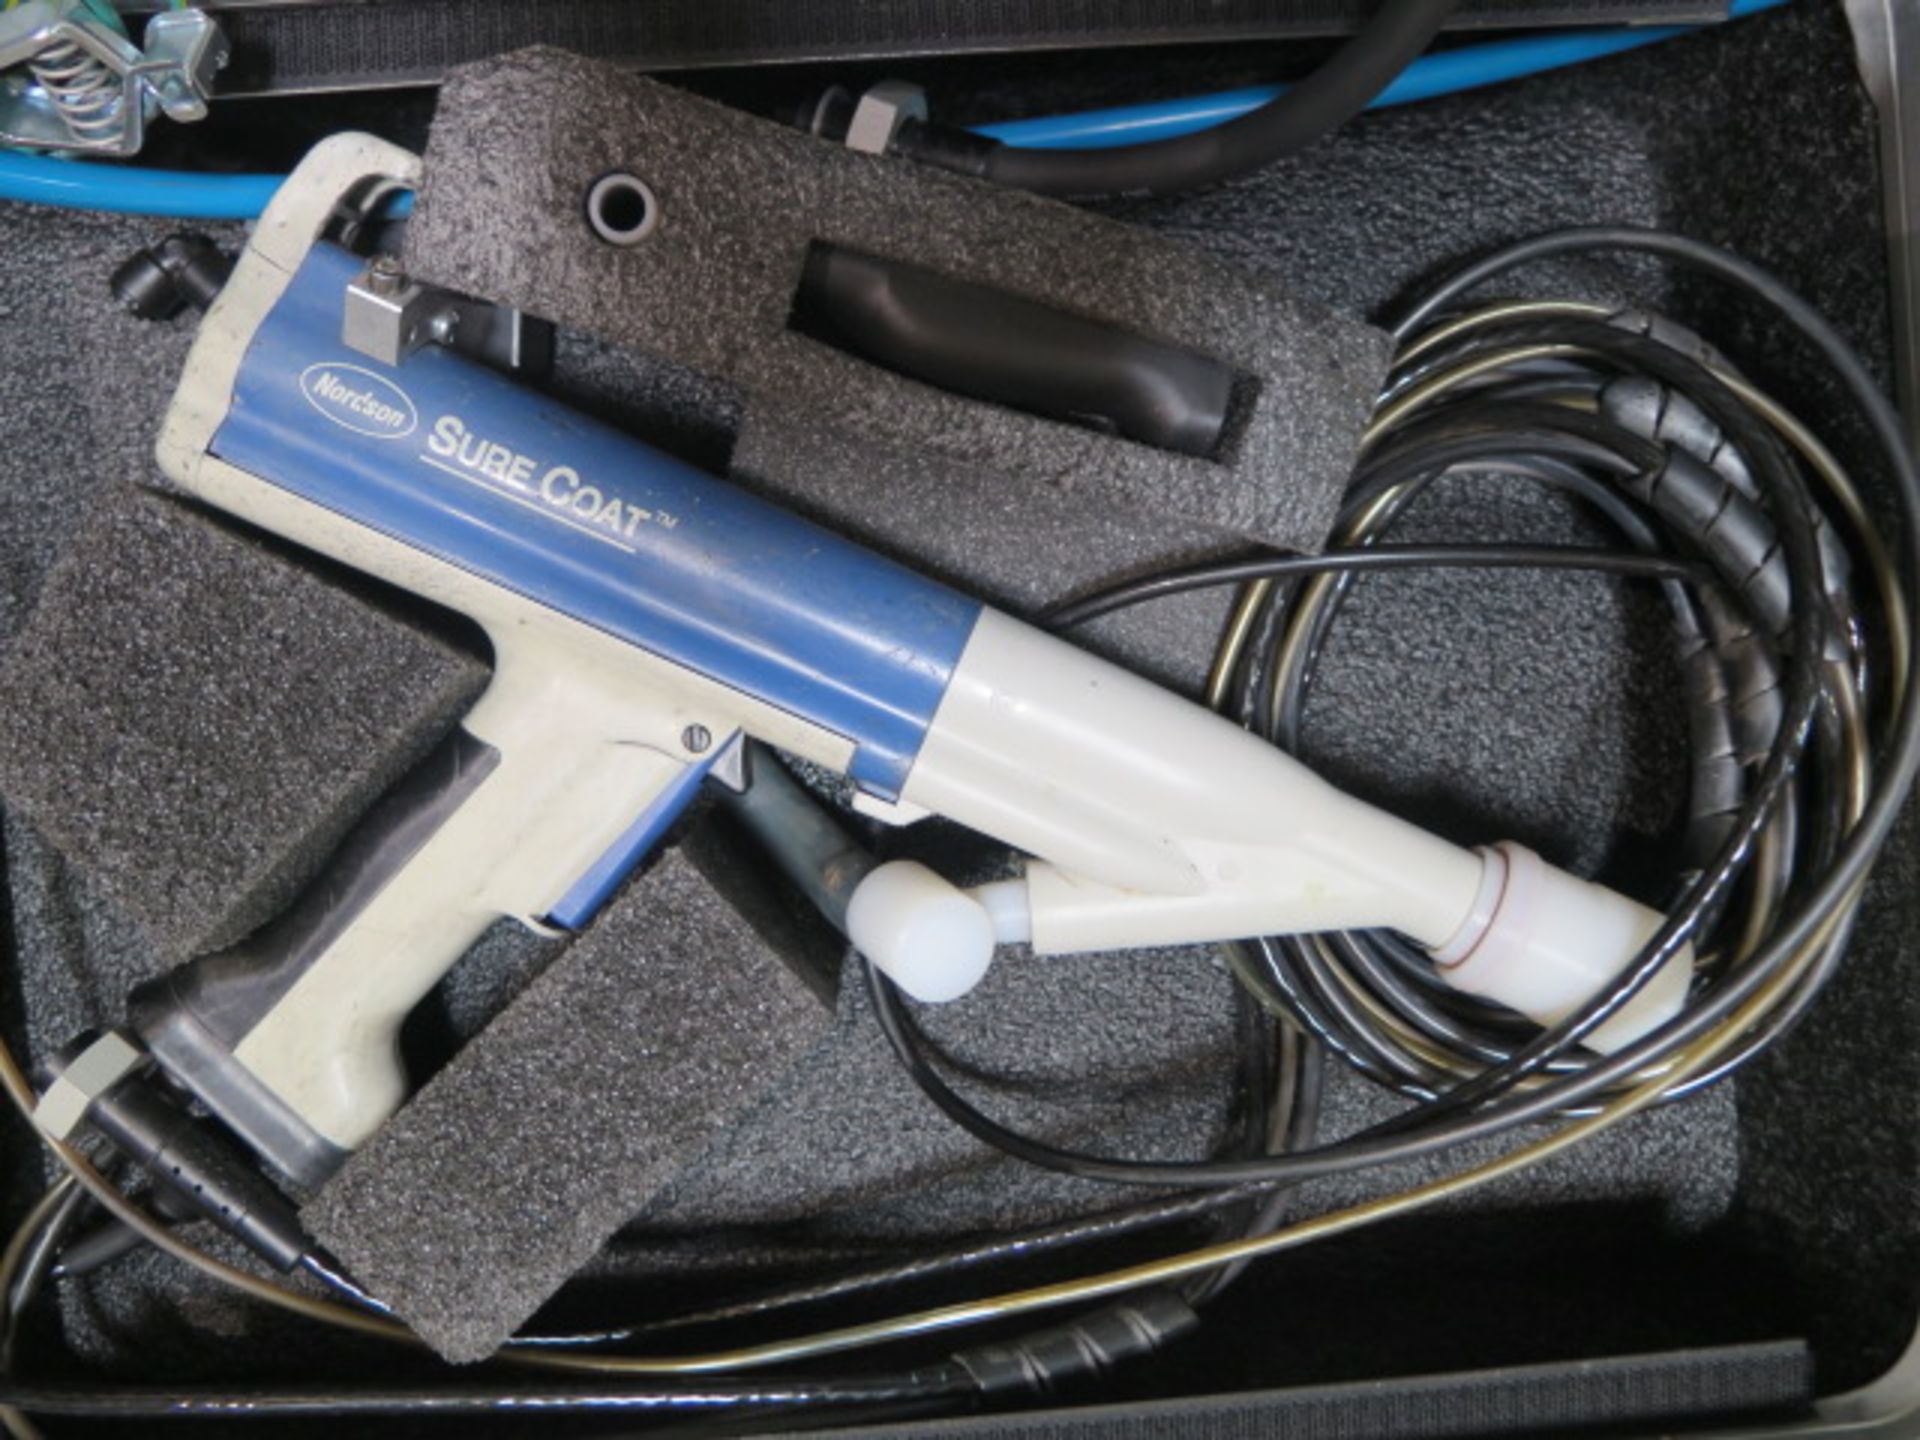 Nordson Sure Coat Demonstration Powder Paint System w/ Digital Gun Control Unit, Spray Gun and Spray - Image 4 of 8